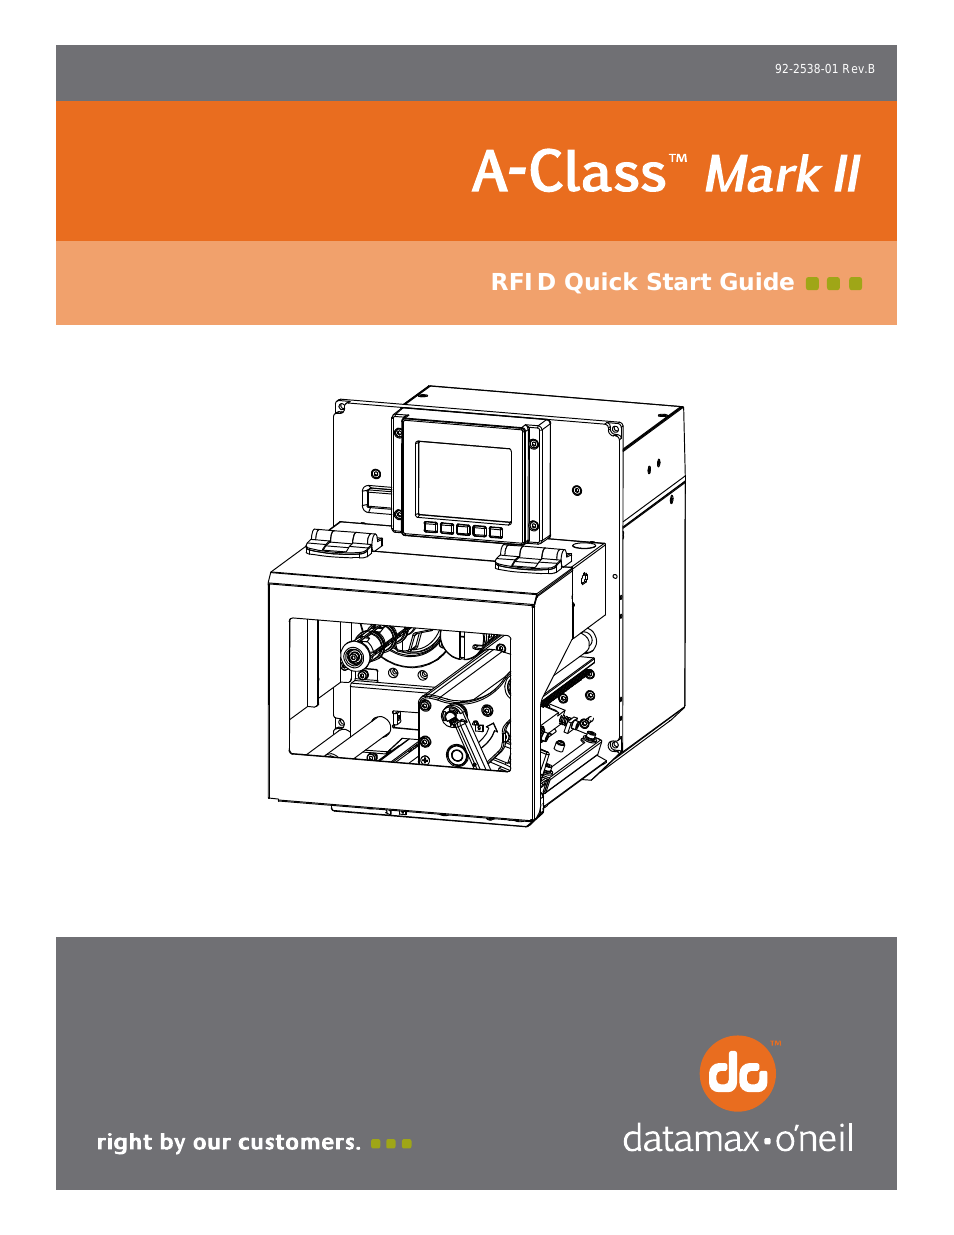 A-Class Mark II RFID Quick Start Guide